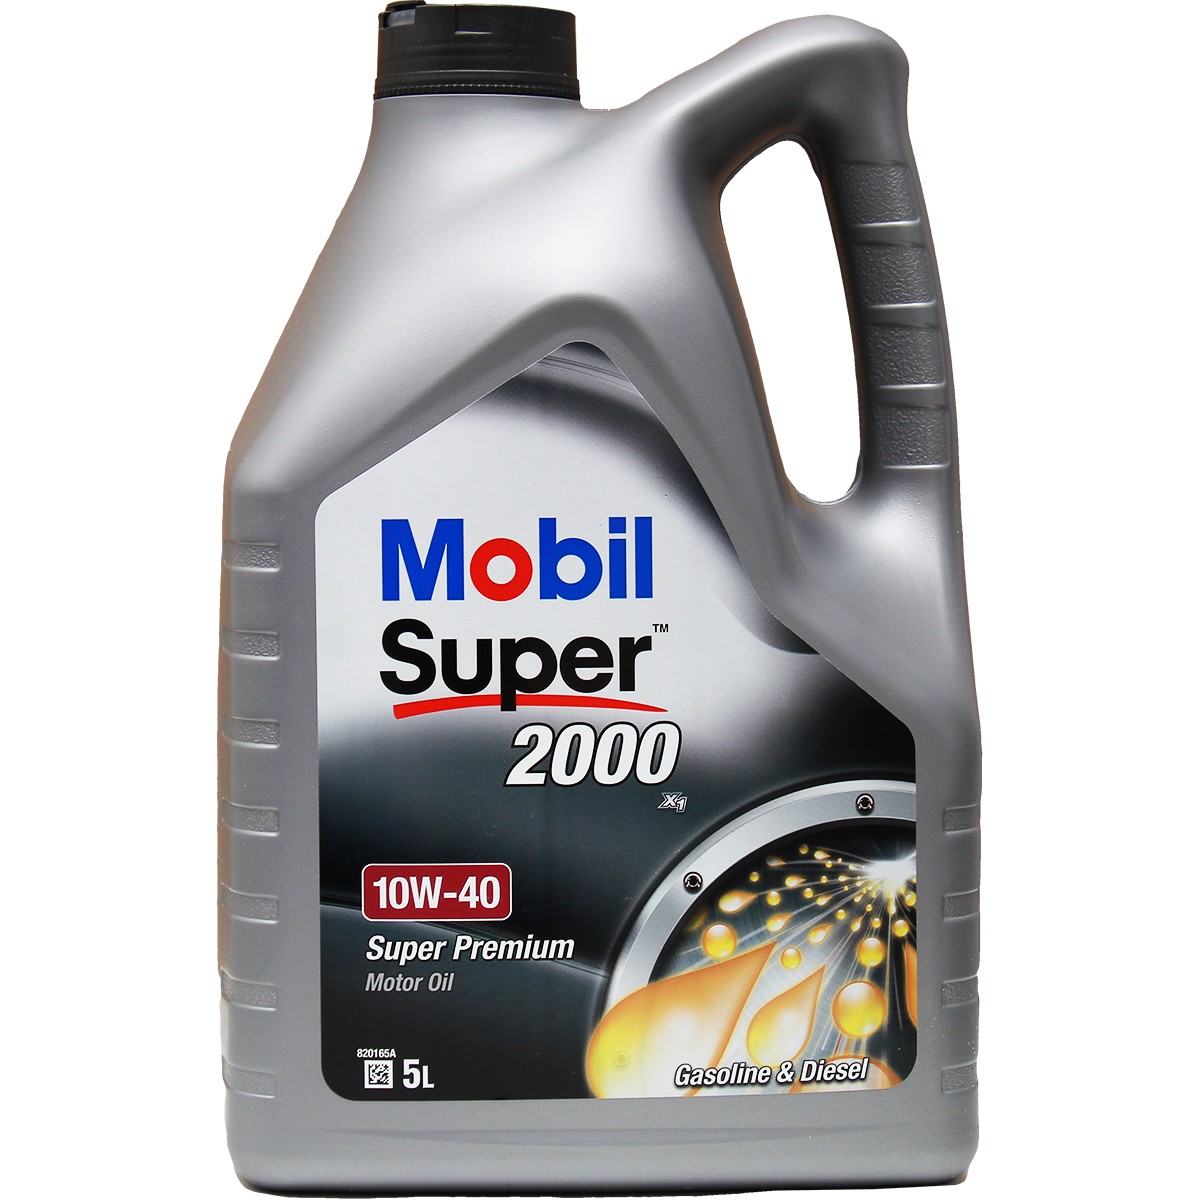 Comprar Aceite para motor MOBIL 150563 Super, 2000 X1 10W-40, 5L, aceite parcialmente sintético